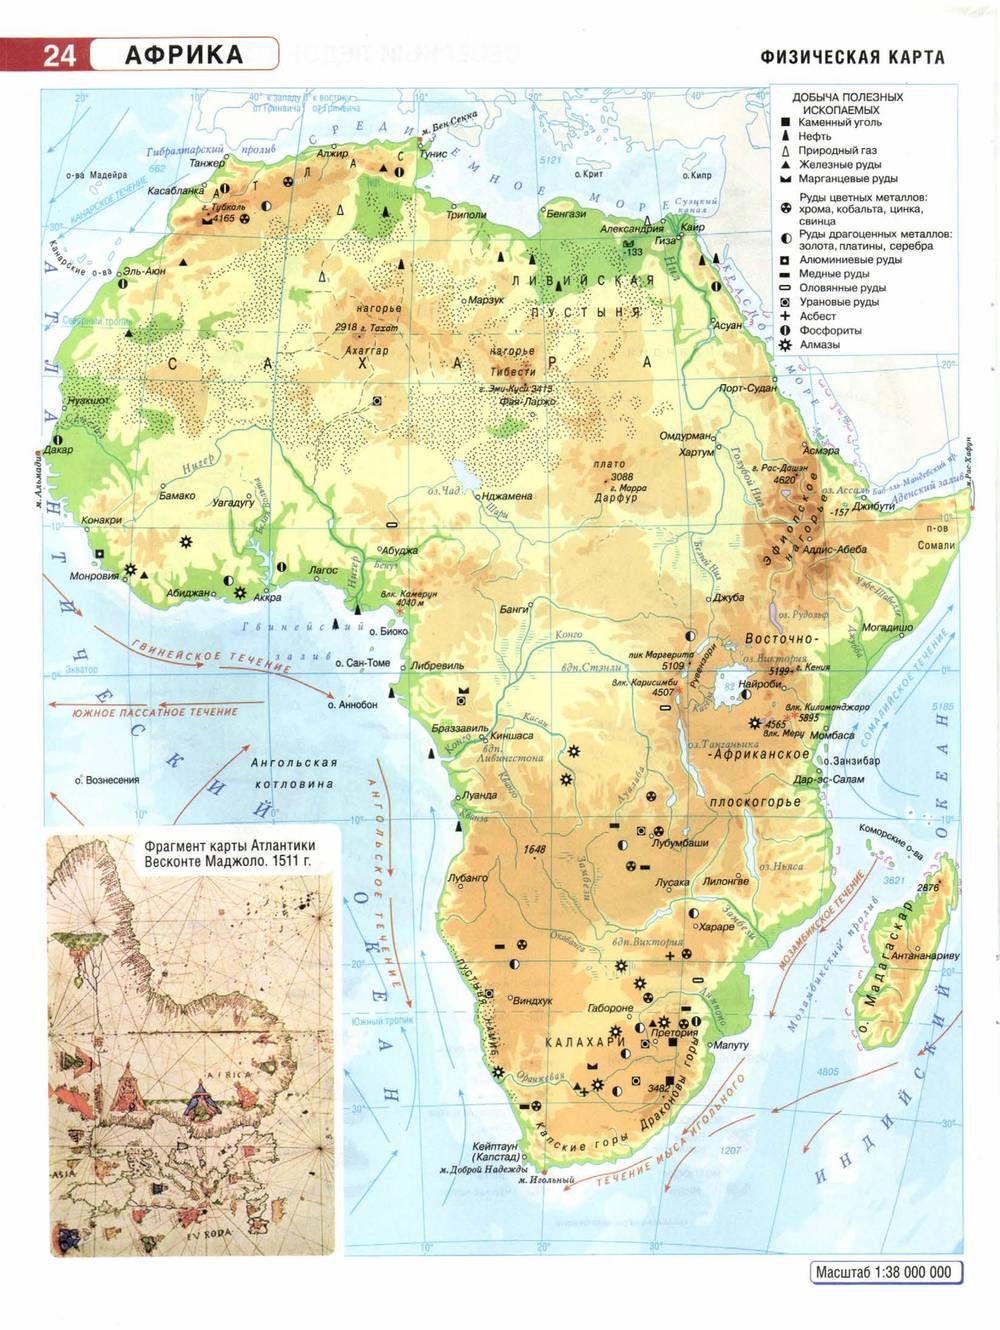 Фото африки на карте мира